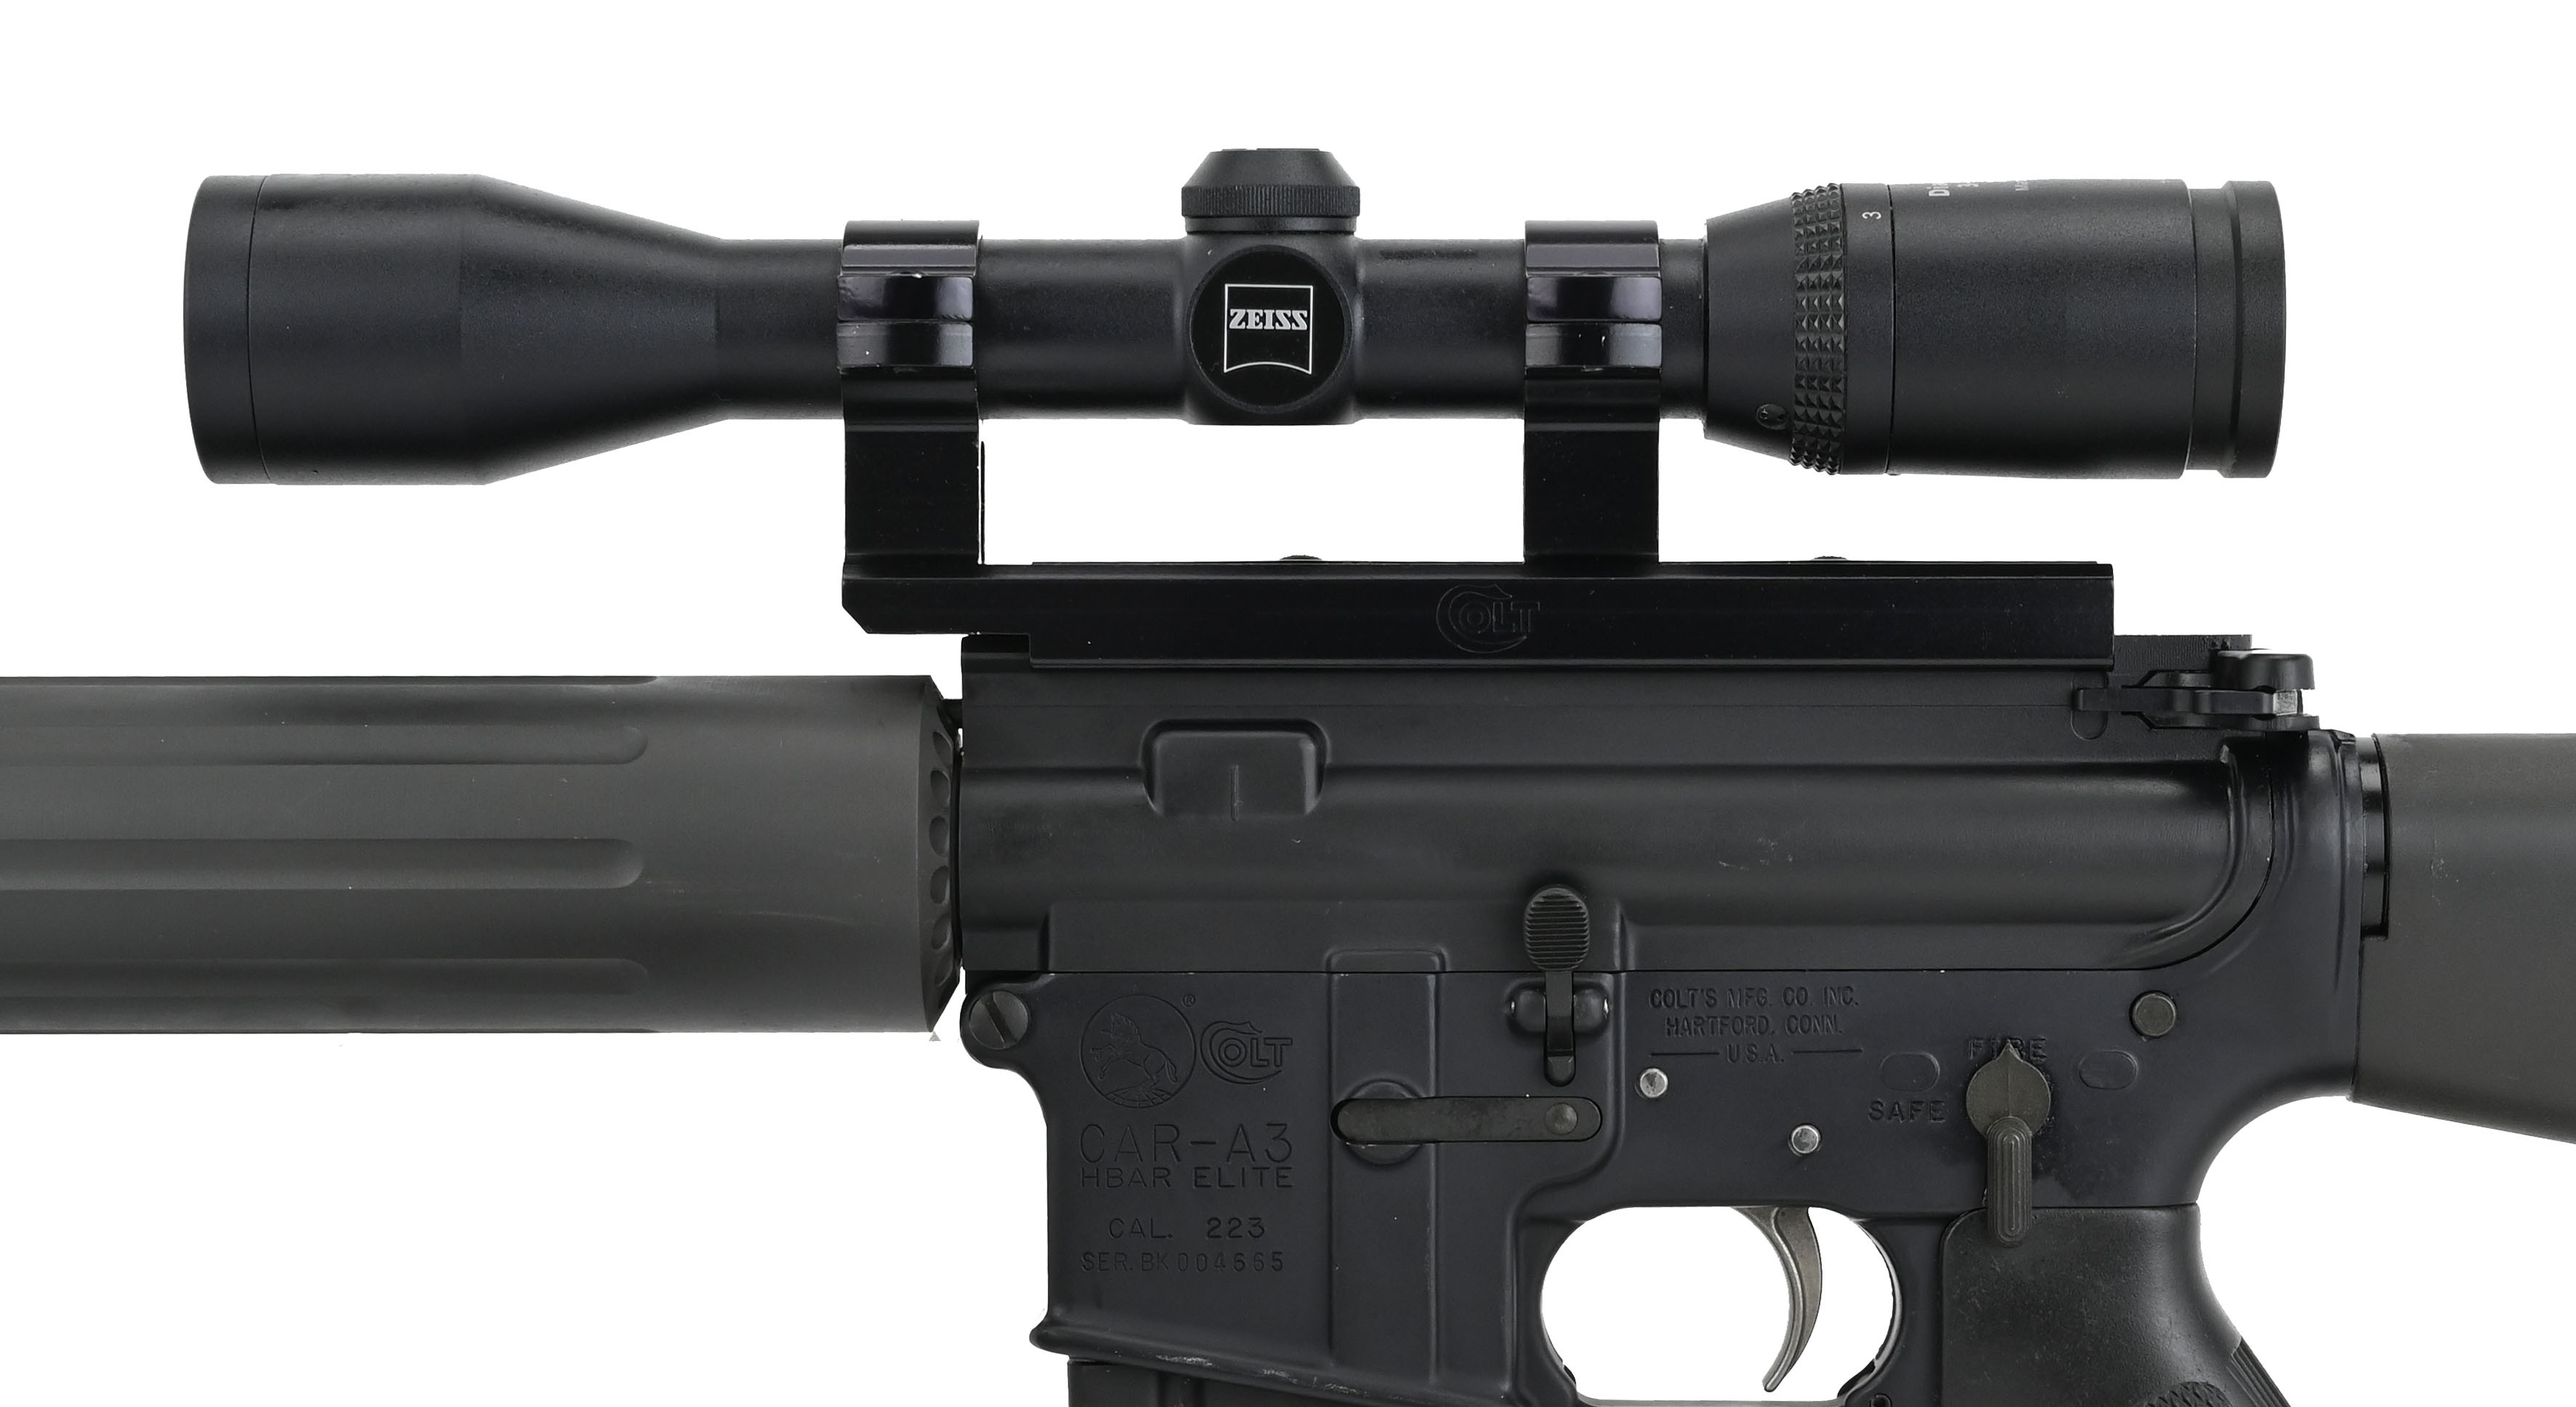 Colt CARA3 HBAR Elite .223 Rem caliber rifle for sale.